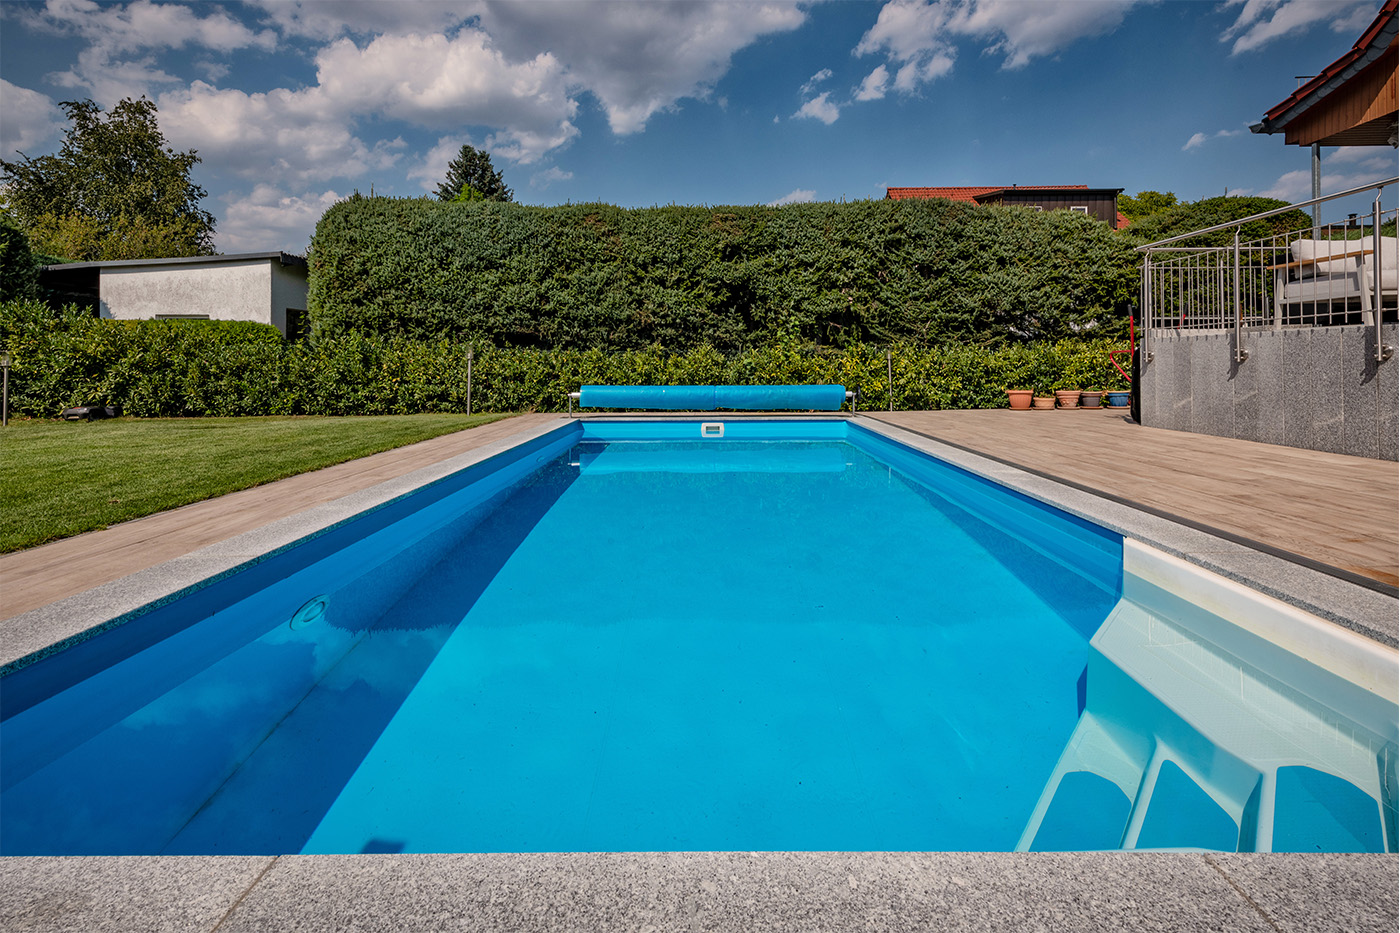 11+ Welche Pool Ins Garten Erfahrung Images - Best Pool Designs